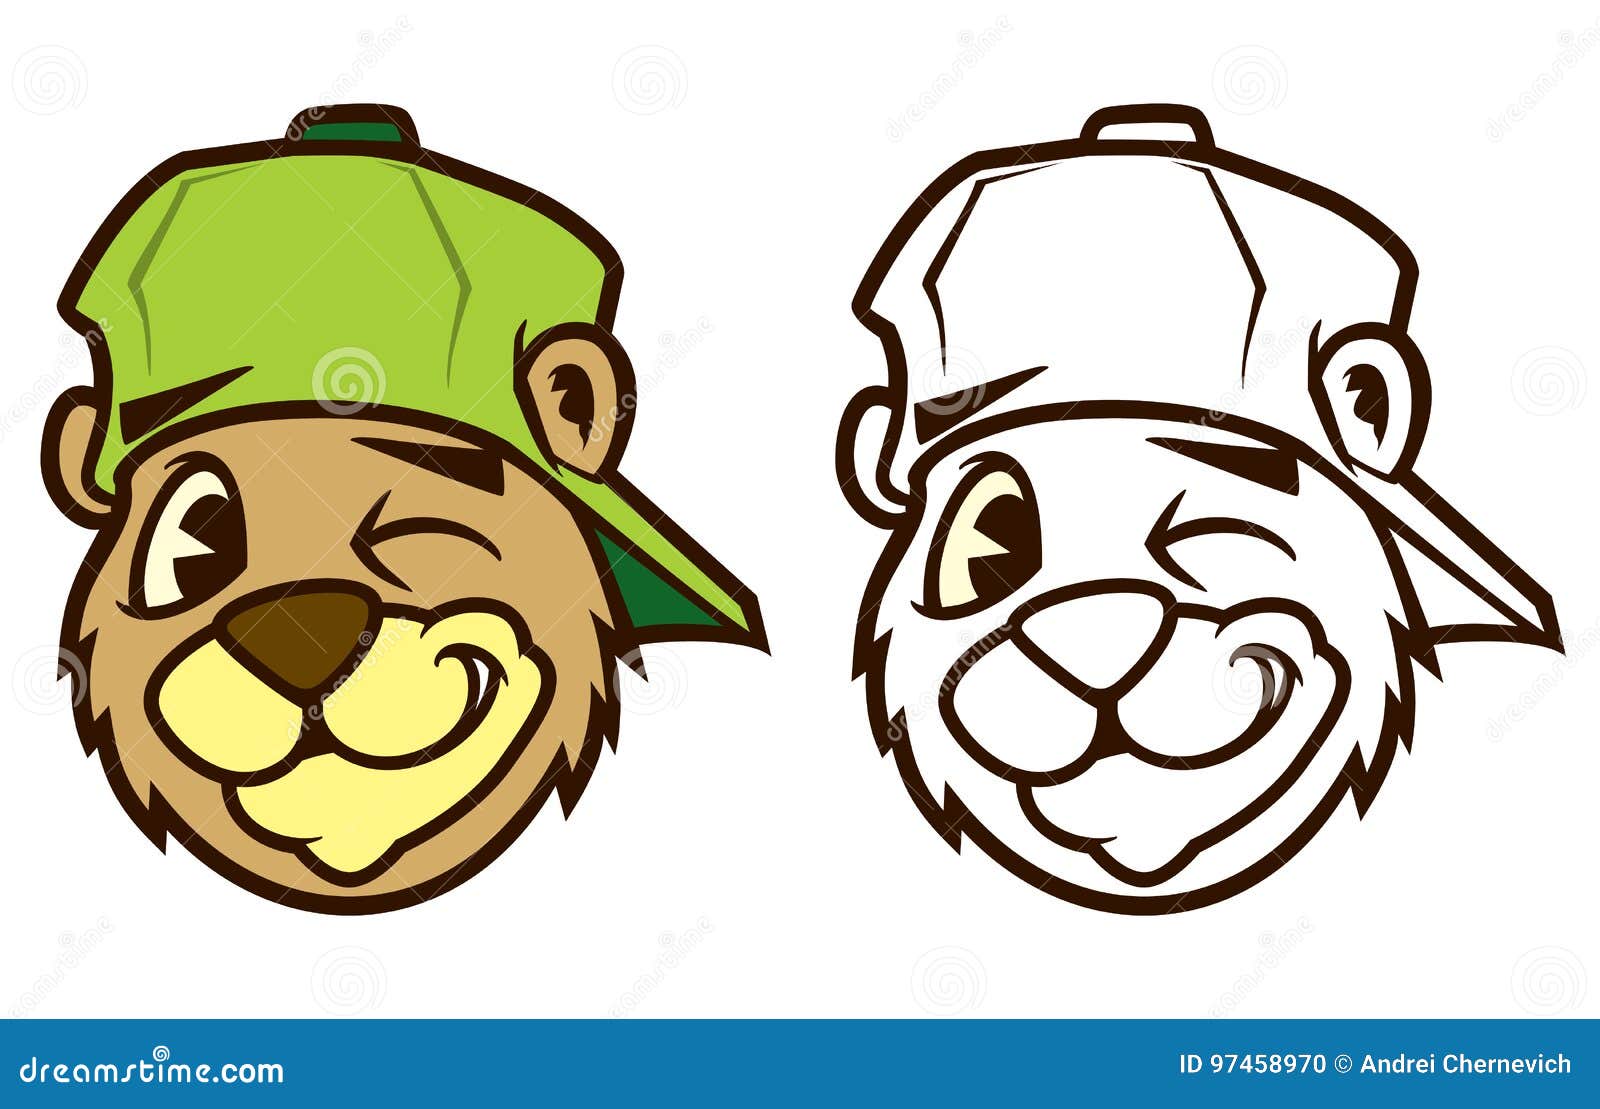 Cool Brown Cartoon Hip Hop Bear Character With Cap Stock Vector